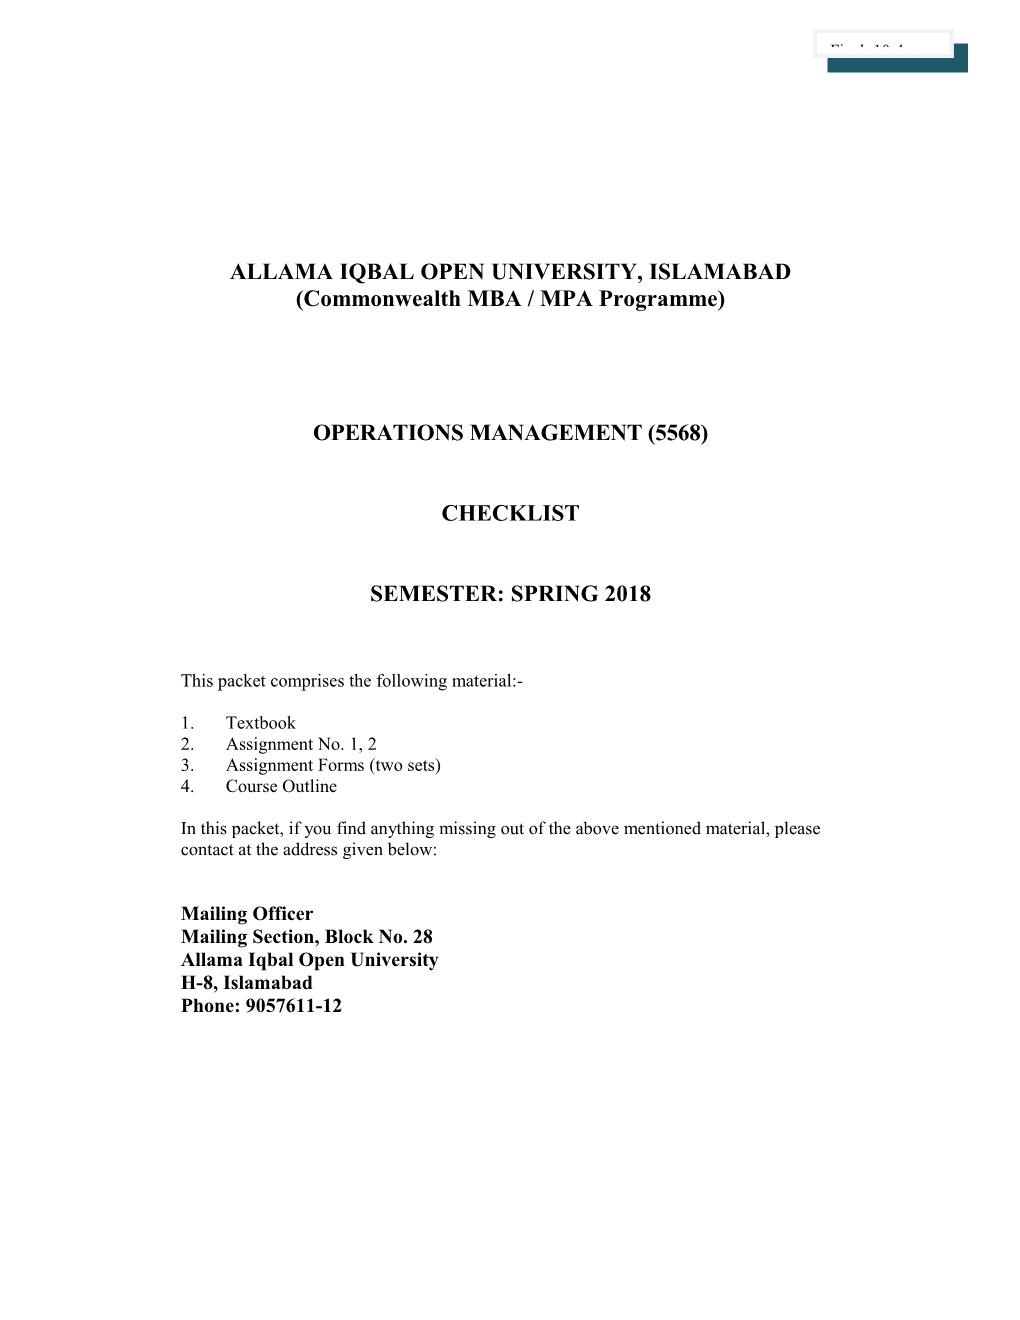 Allama Iqbal Open University s15